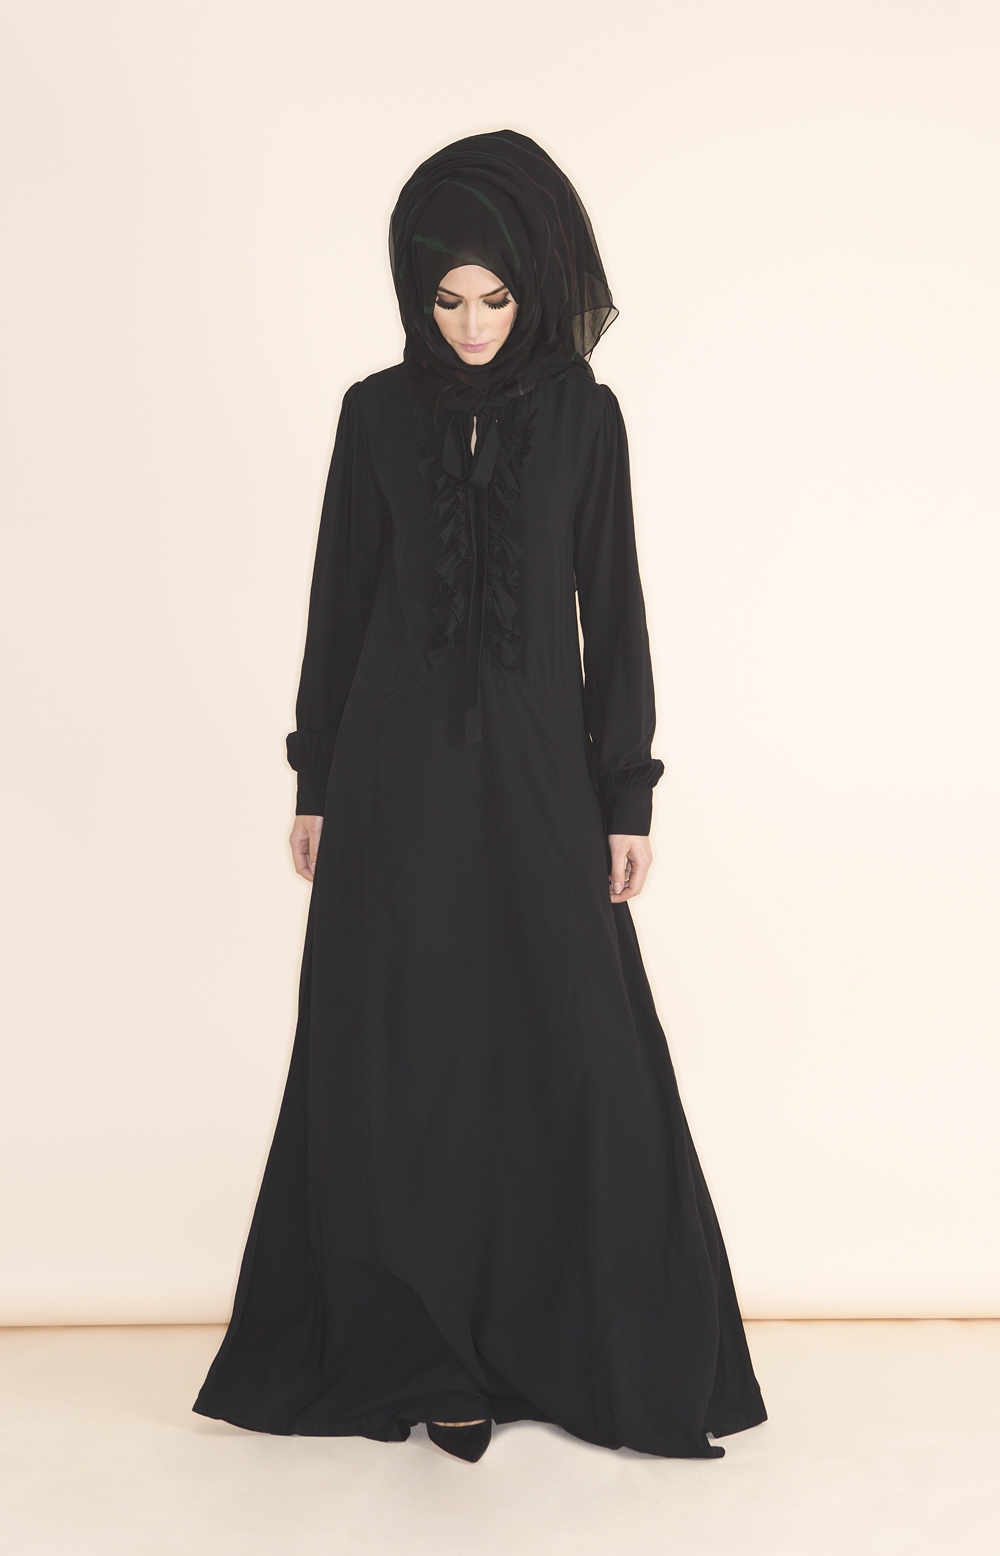 10 Contoh Model Baju Muslim Terbaru  2019 Model  HIjab